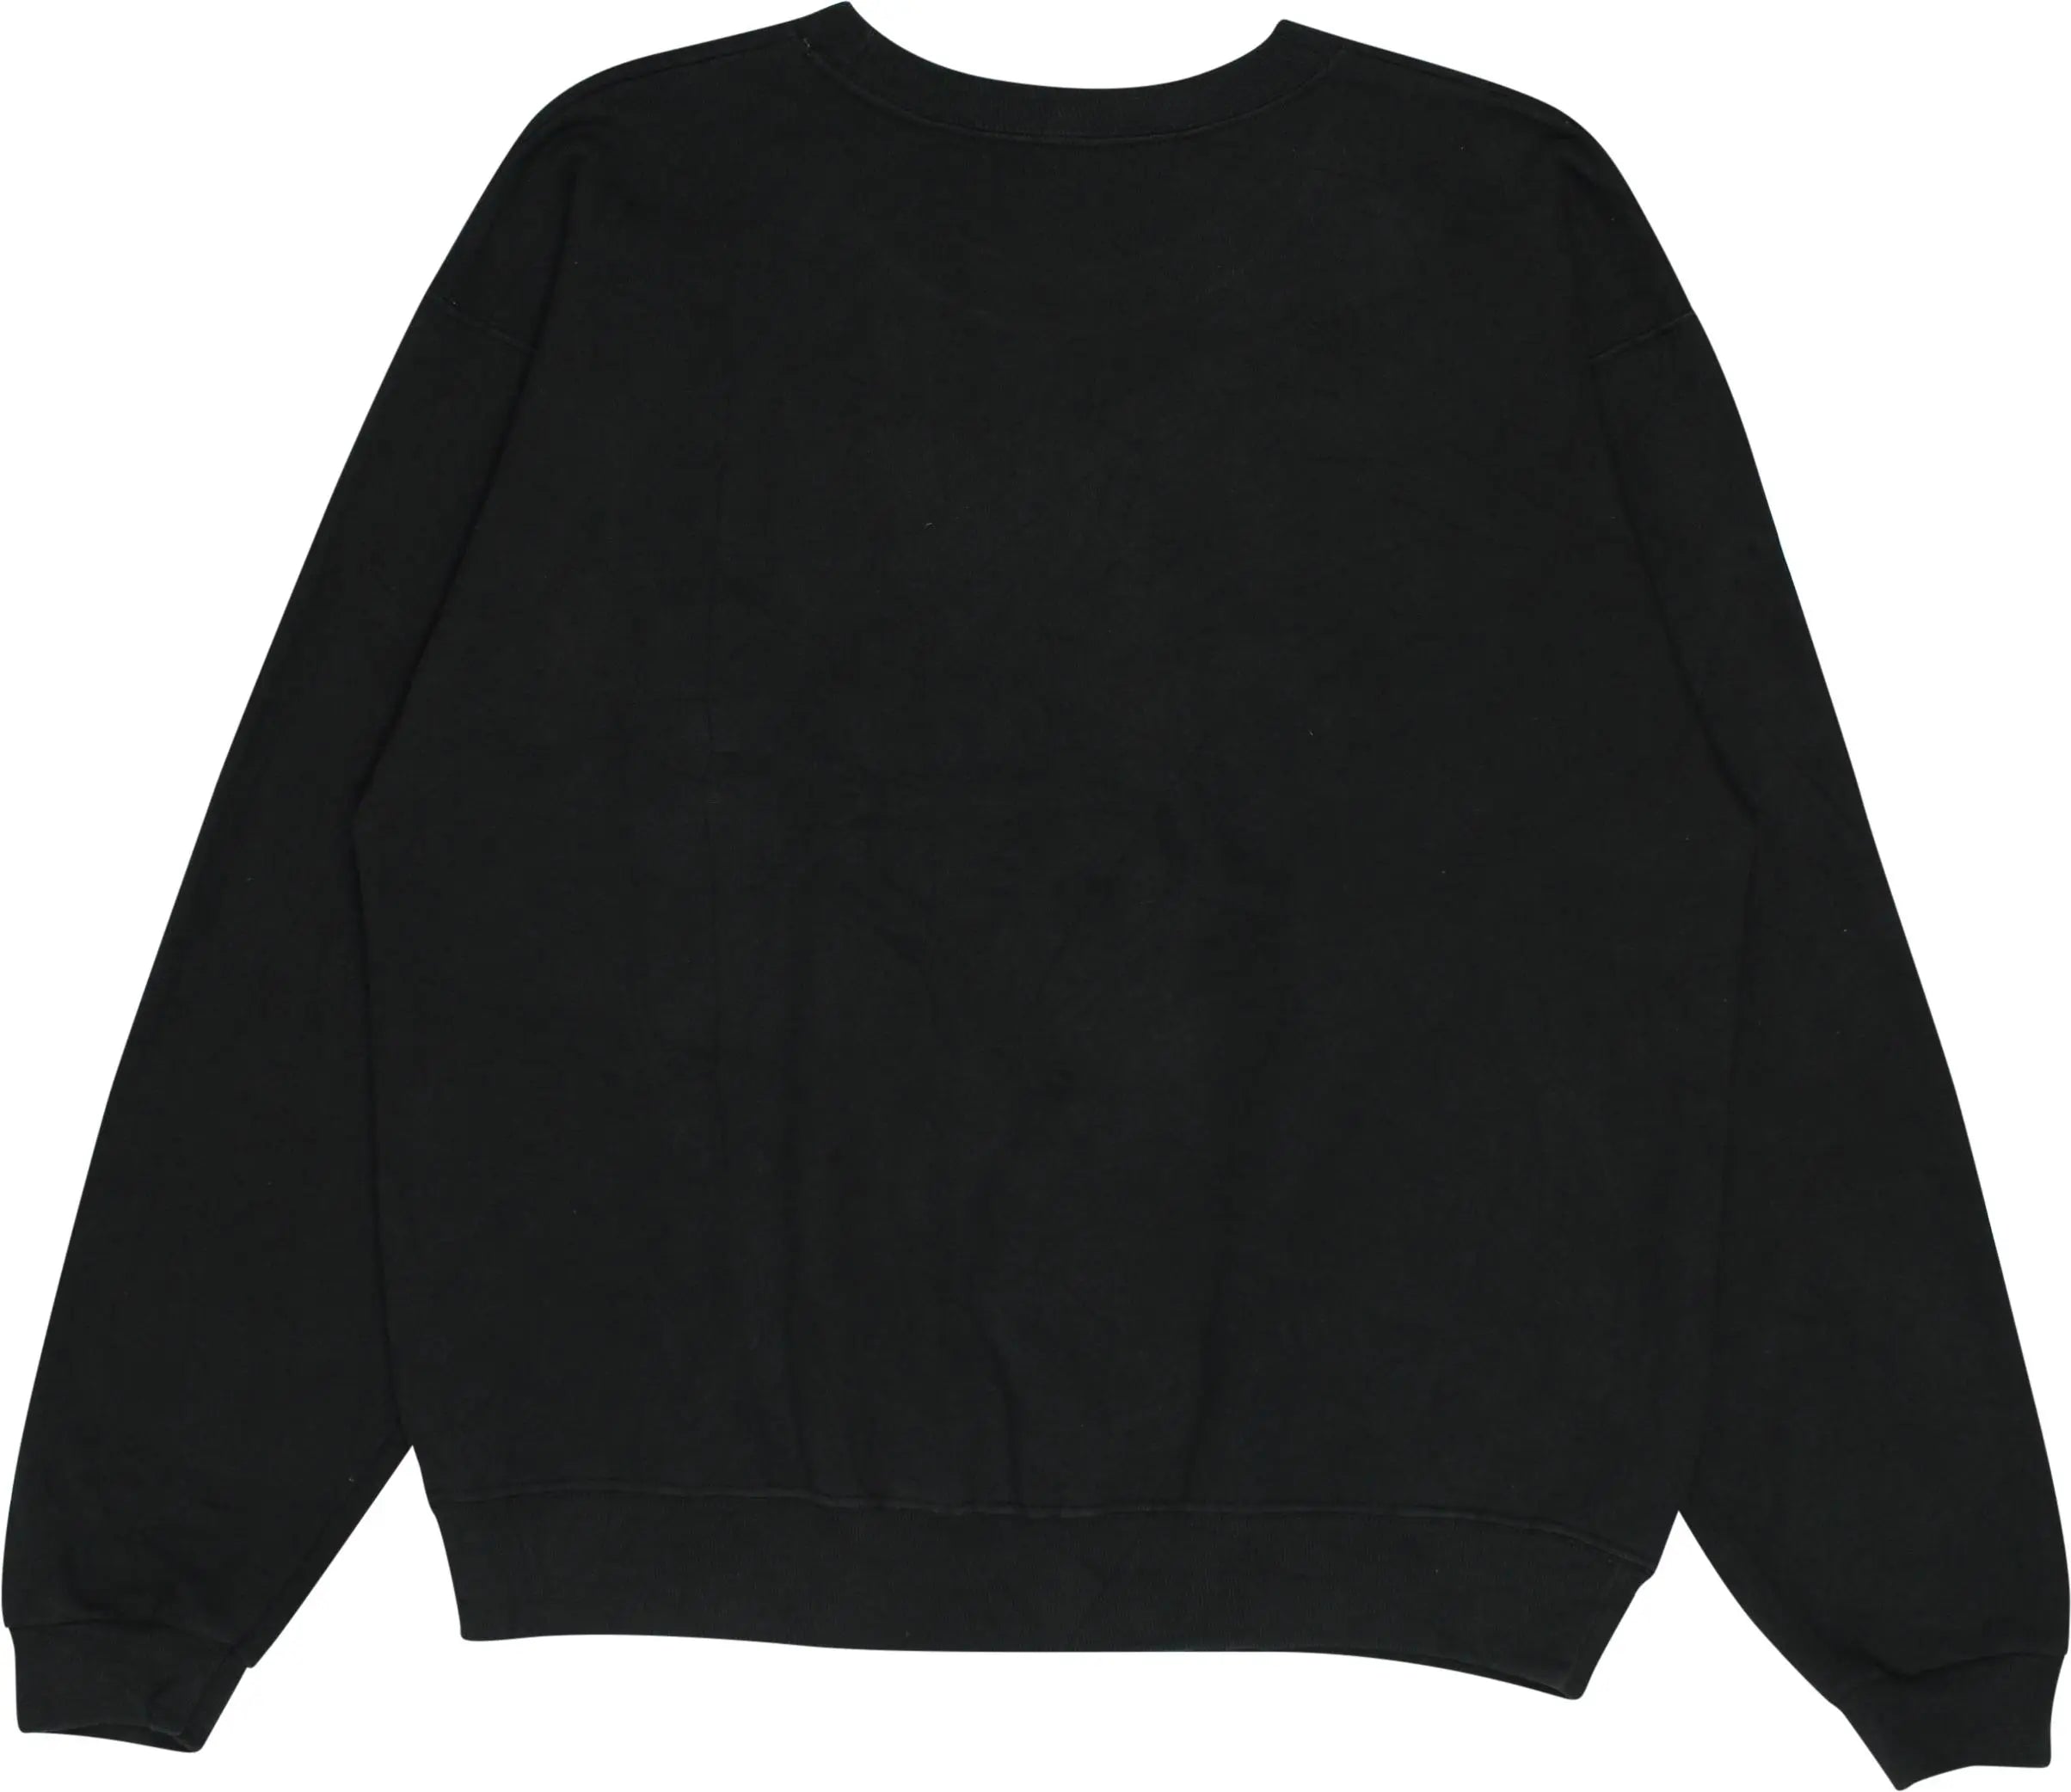 Anvil - North Catholic Irish Sweater- ThriftTale.com - Vintage and second handclothing